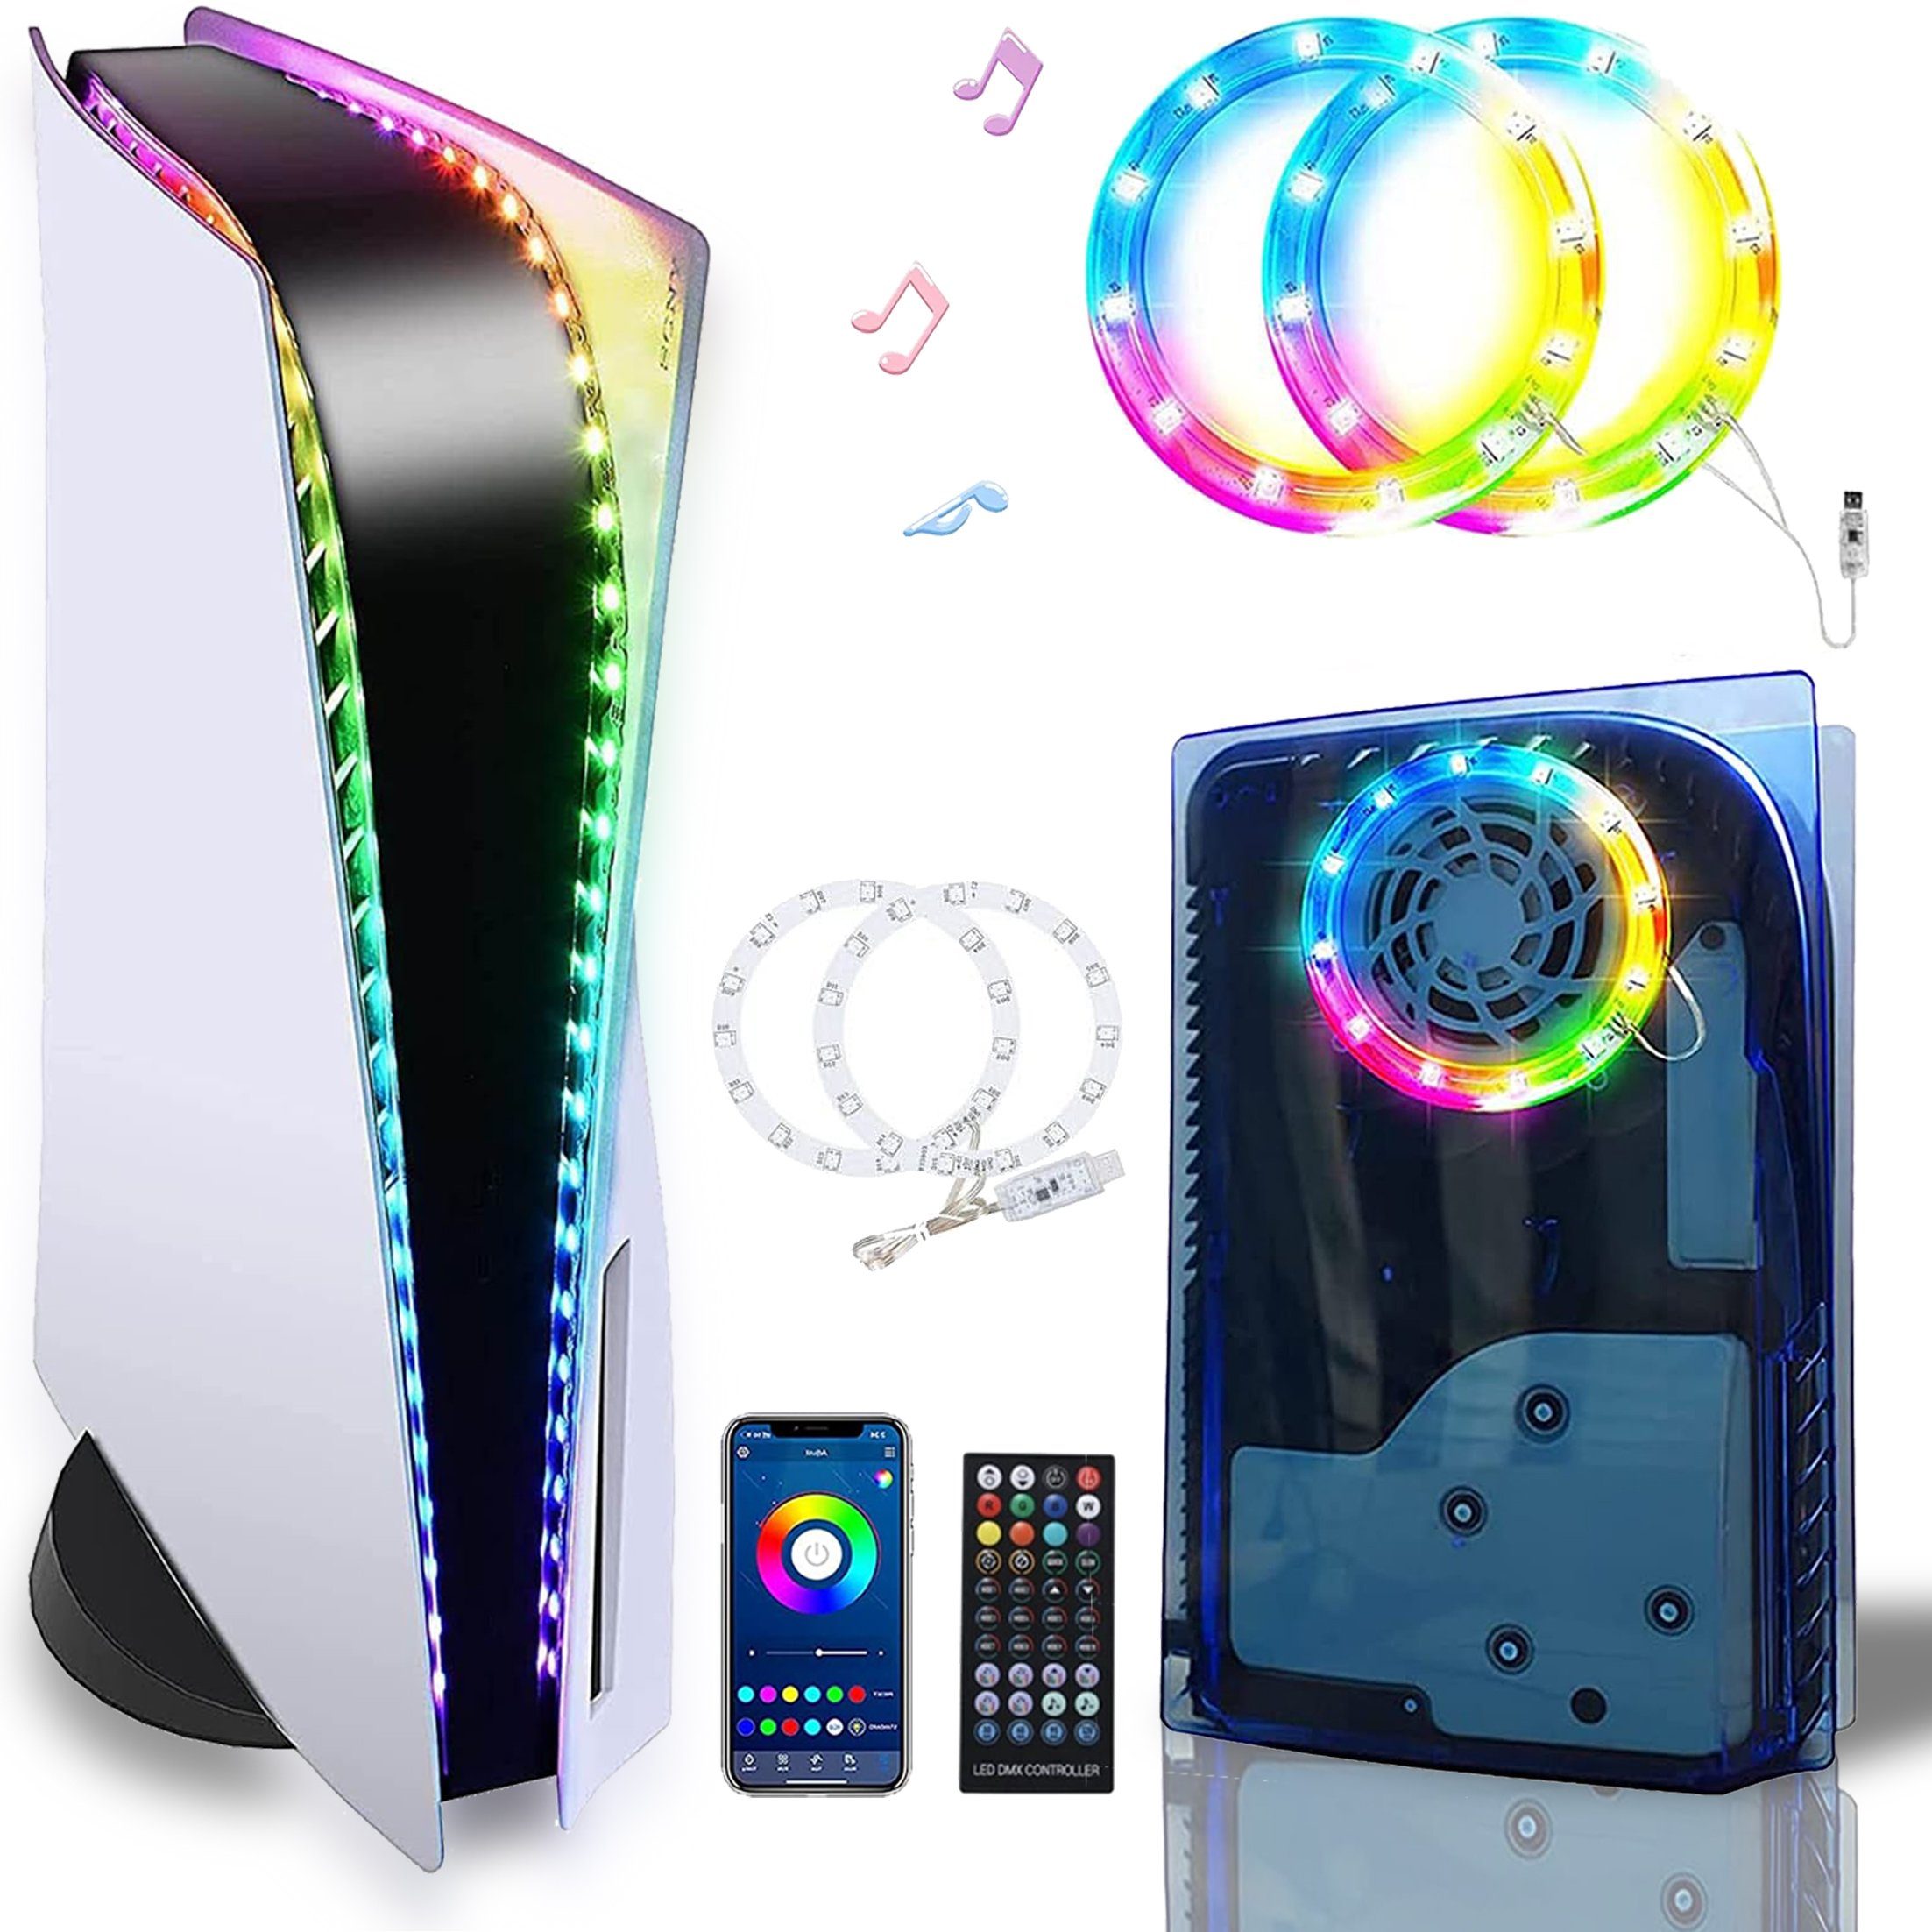 Tadow PS5-Konsole LED-Lichtleiste, 8 PlayStation USB-Taste/Fernbedienung/App, Farben 5-Controller